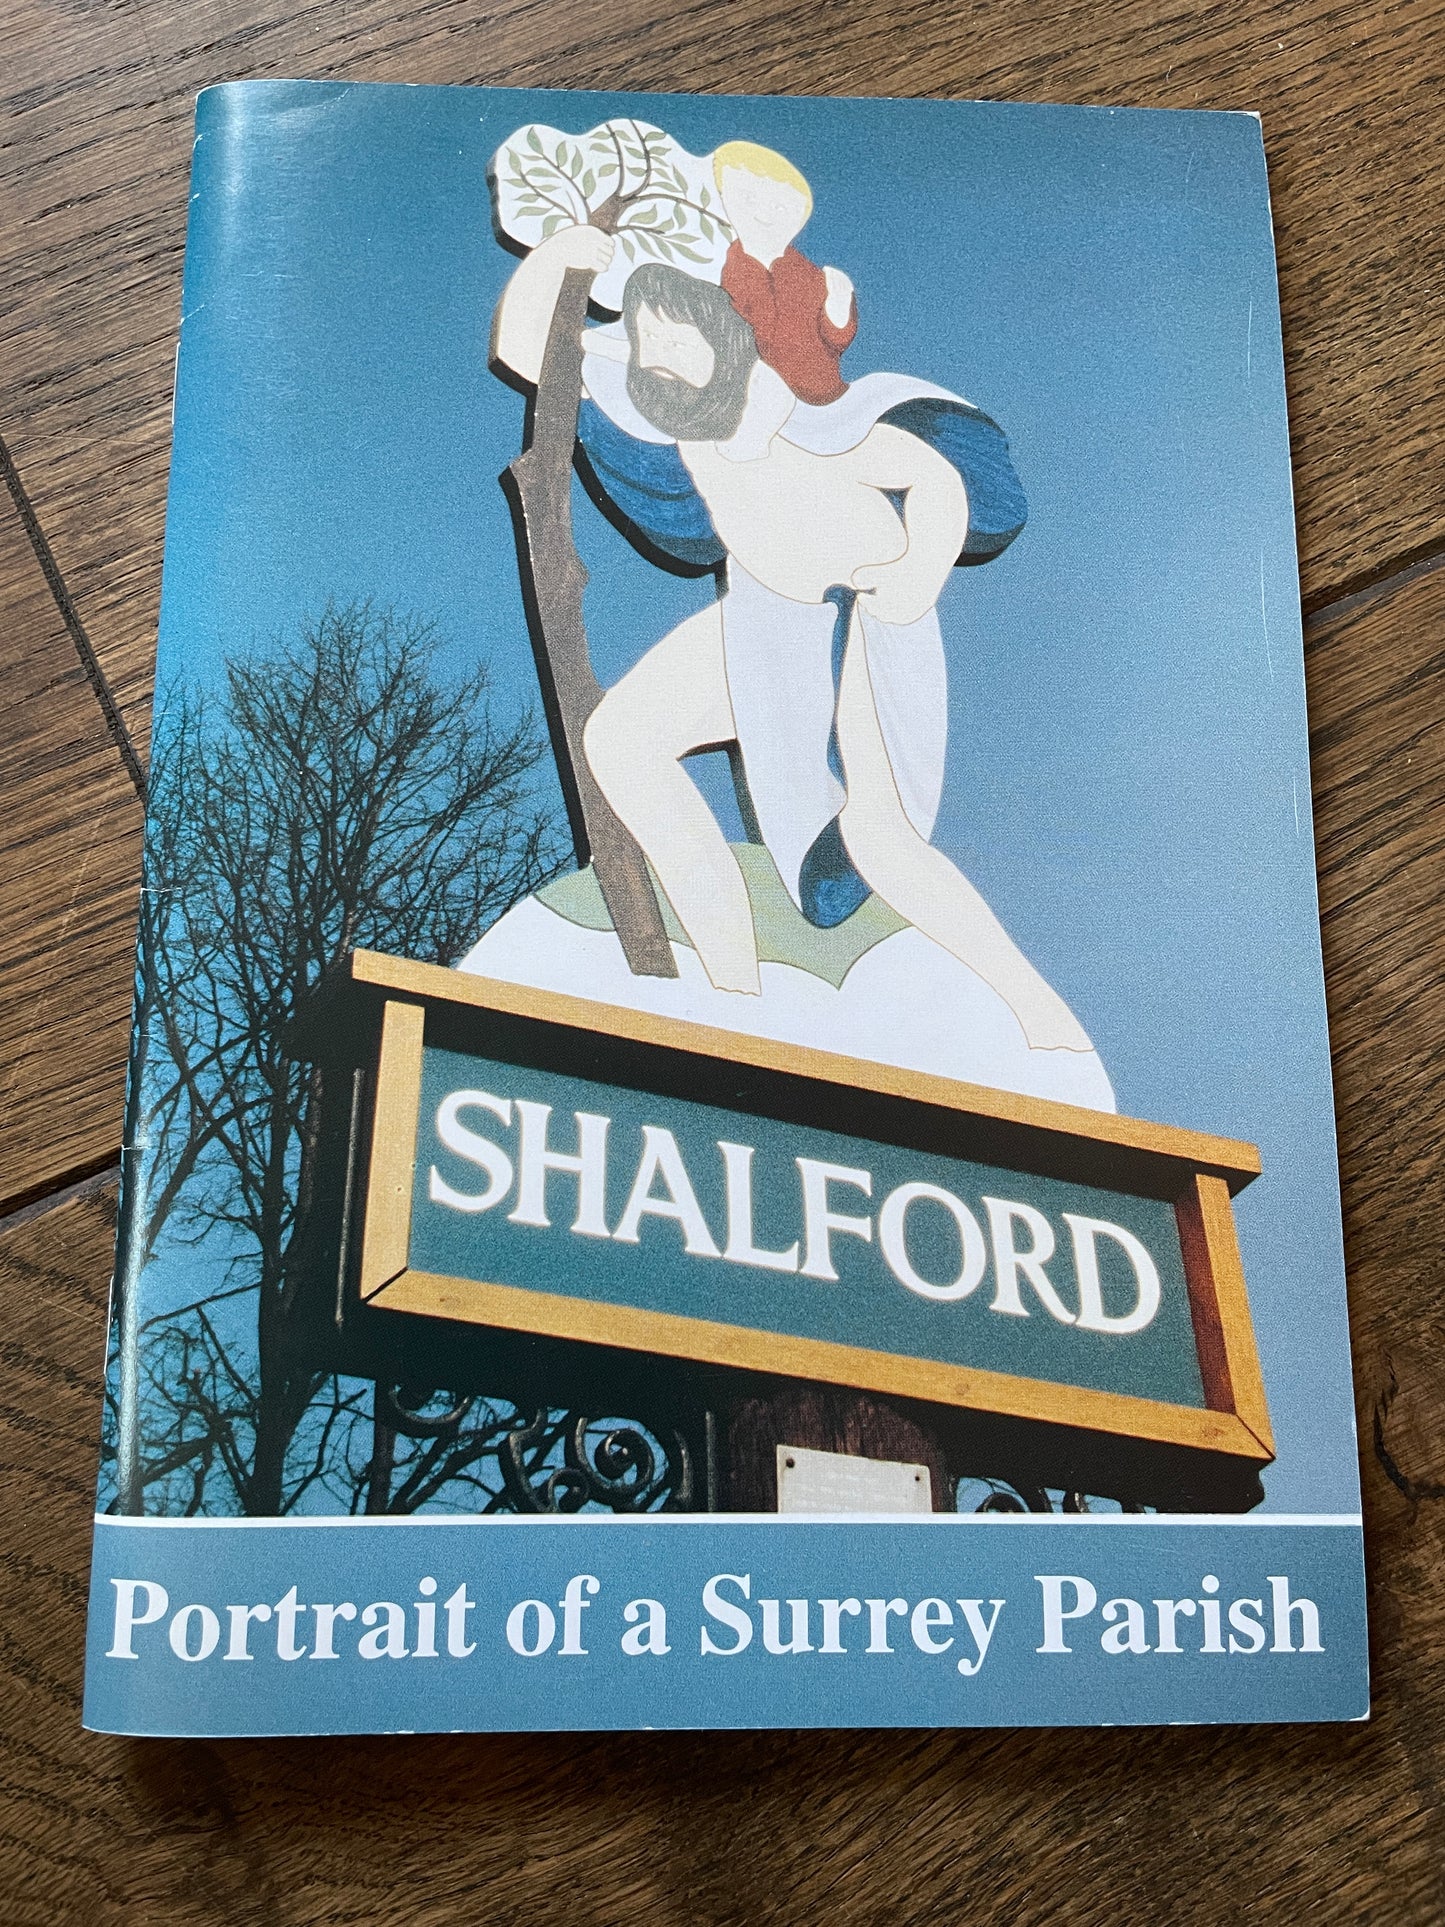 Shalford - Portrait of a Surrey Parish